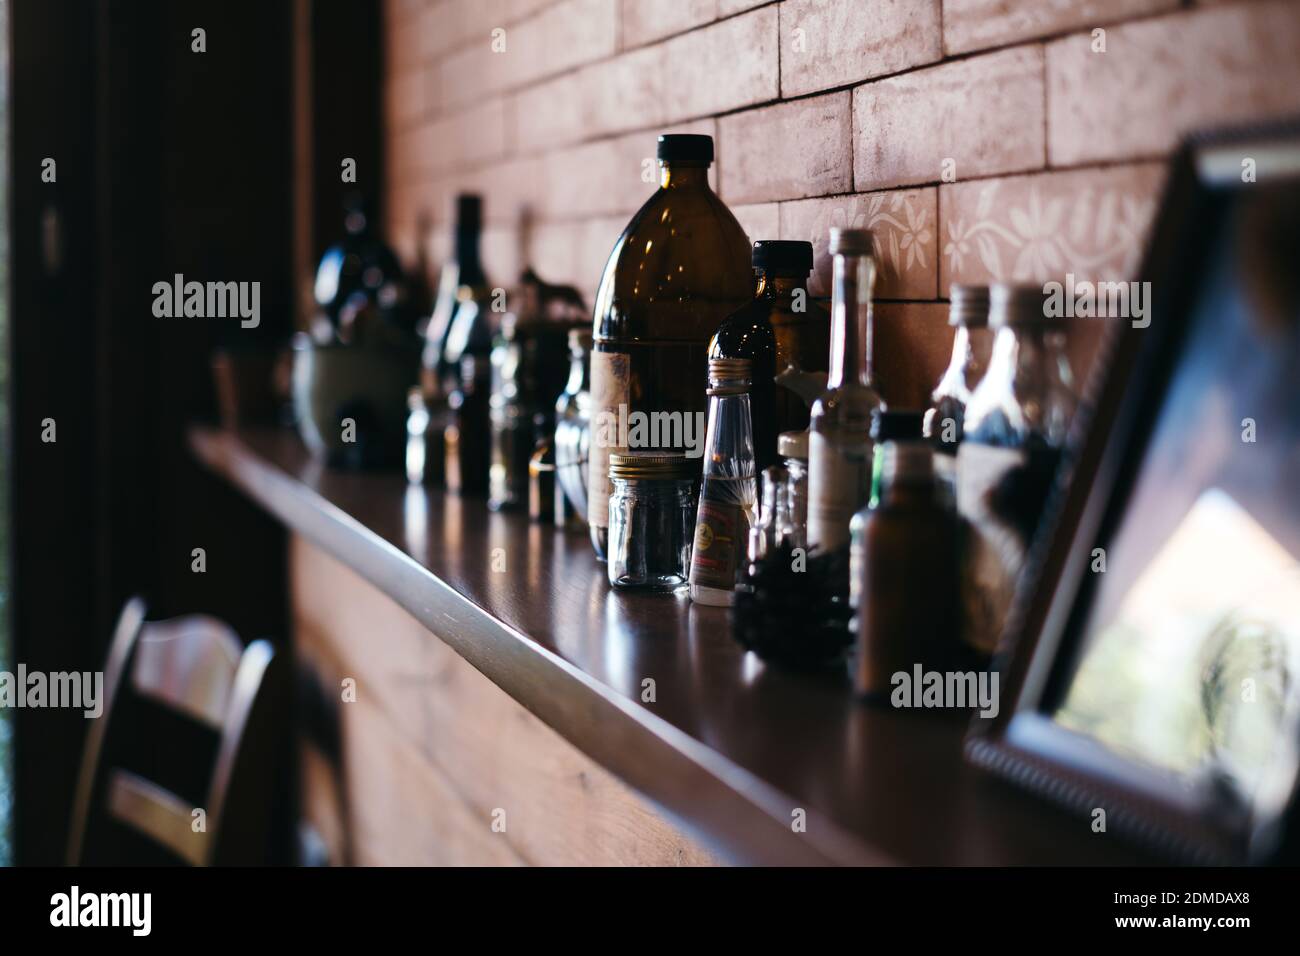 Chemical bottles on shelf vintage brick wall Stock Photo